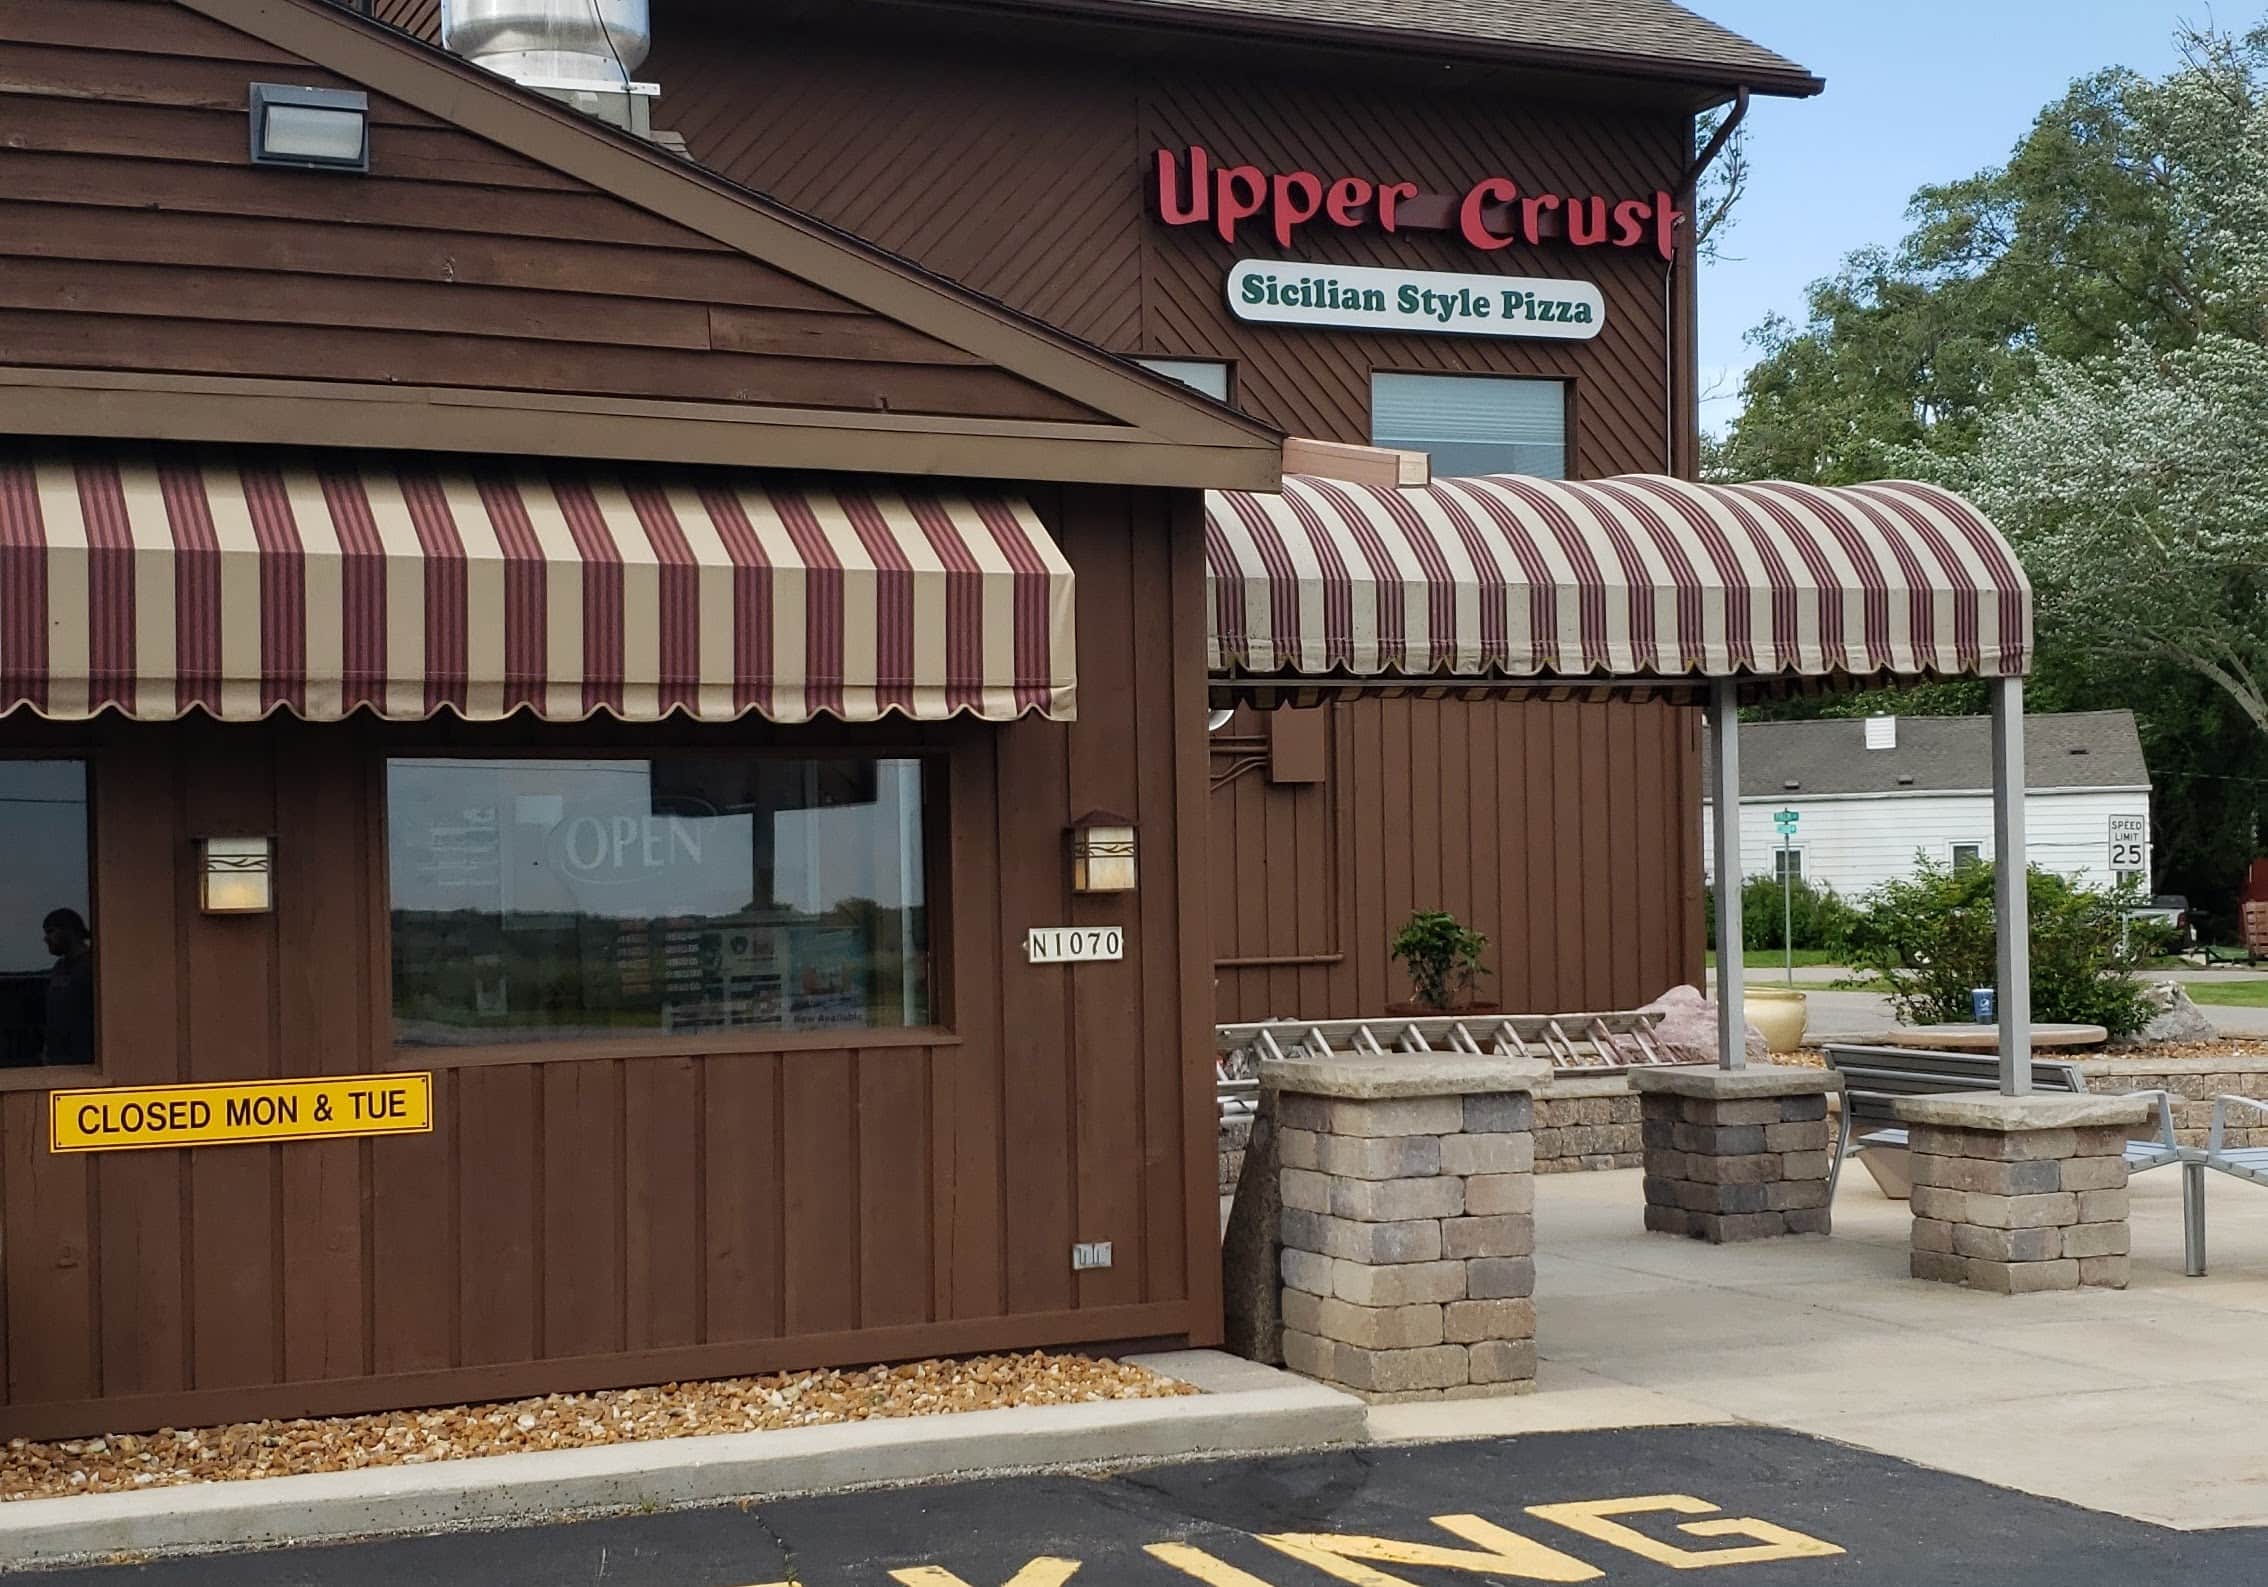 Upper Crust Pizzeria - Pell Lake (WI 53157), US, open pizzerias near me